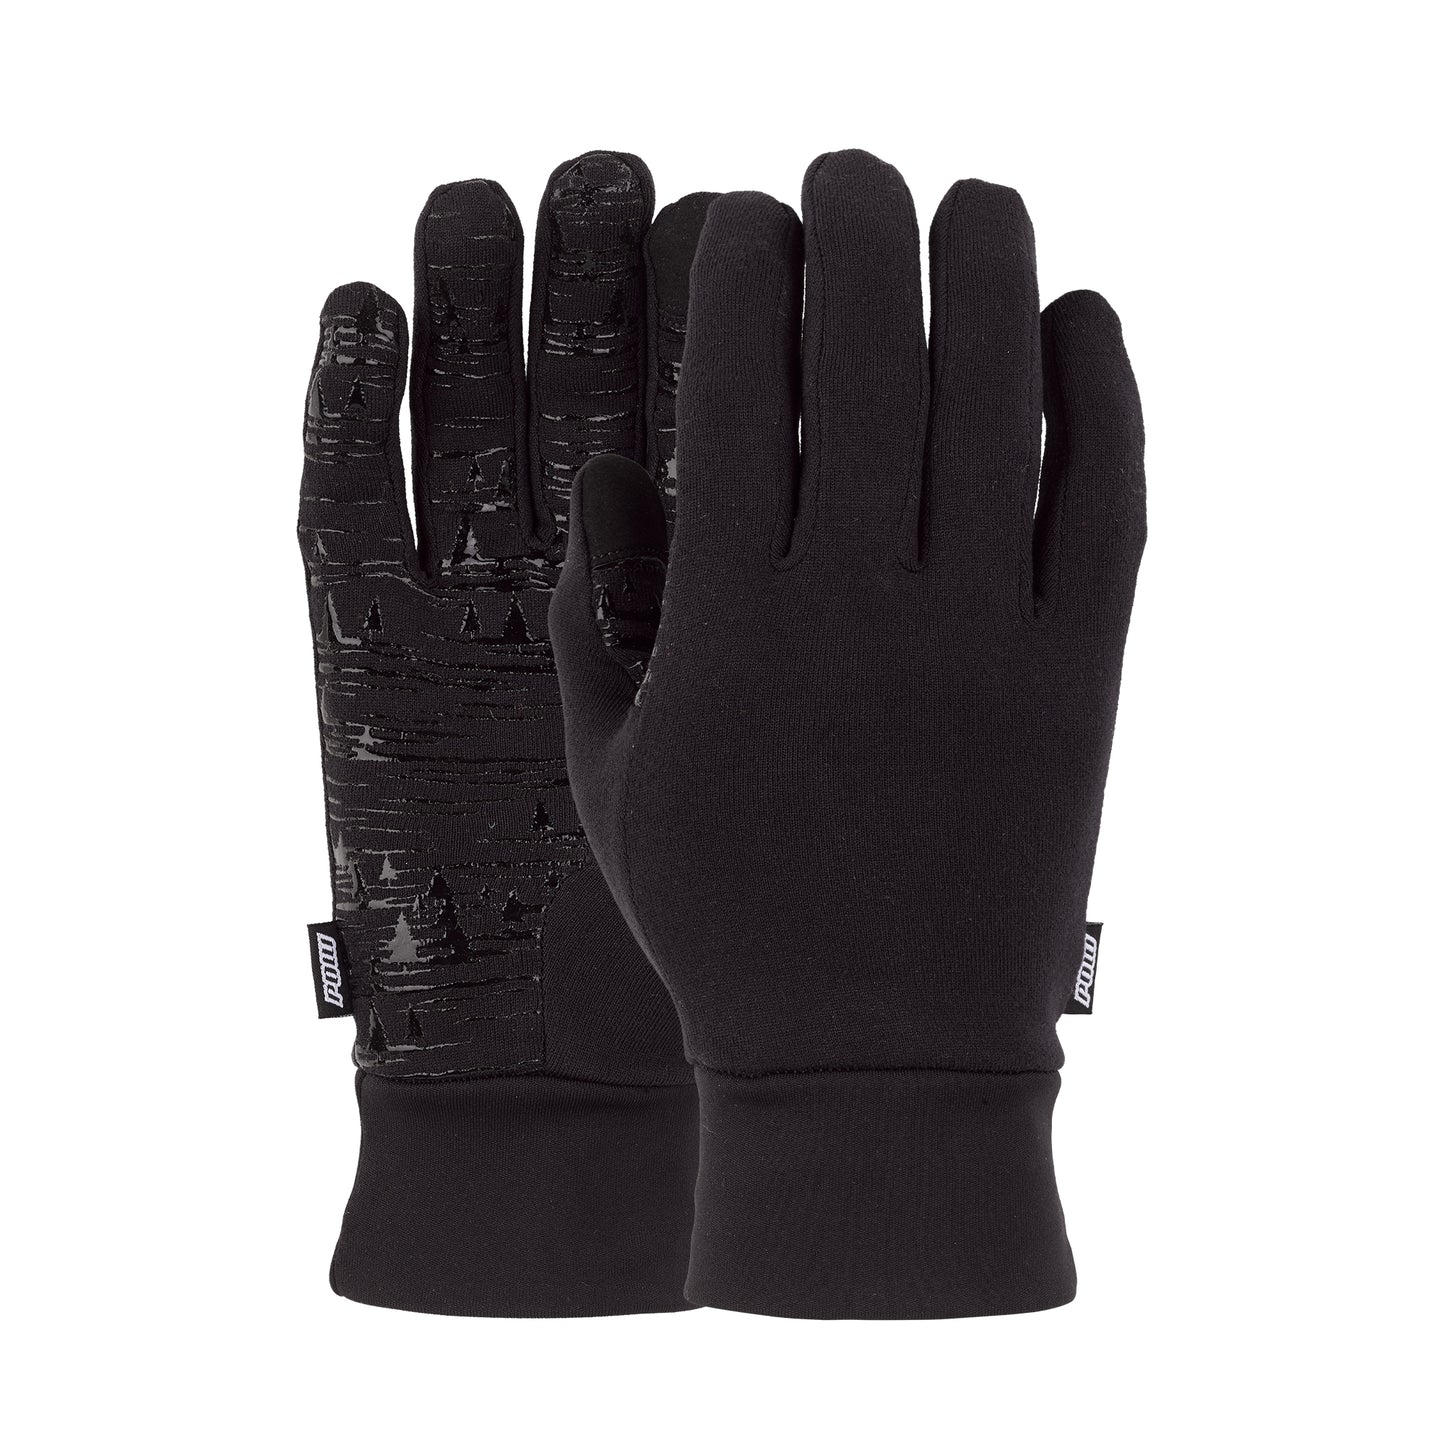 POW Poly Pro TT Unisex Ski / Snowboard Glove Liner Black